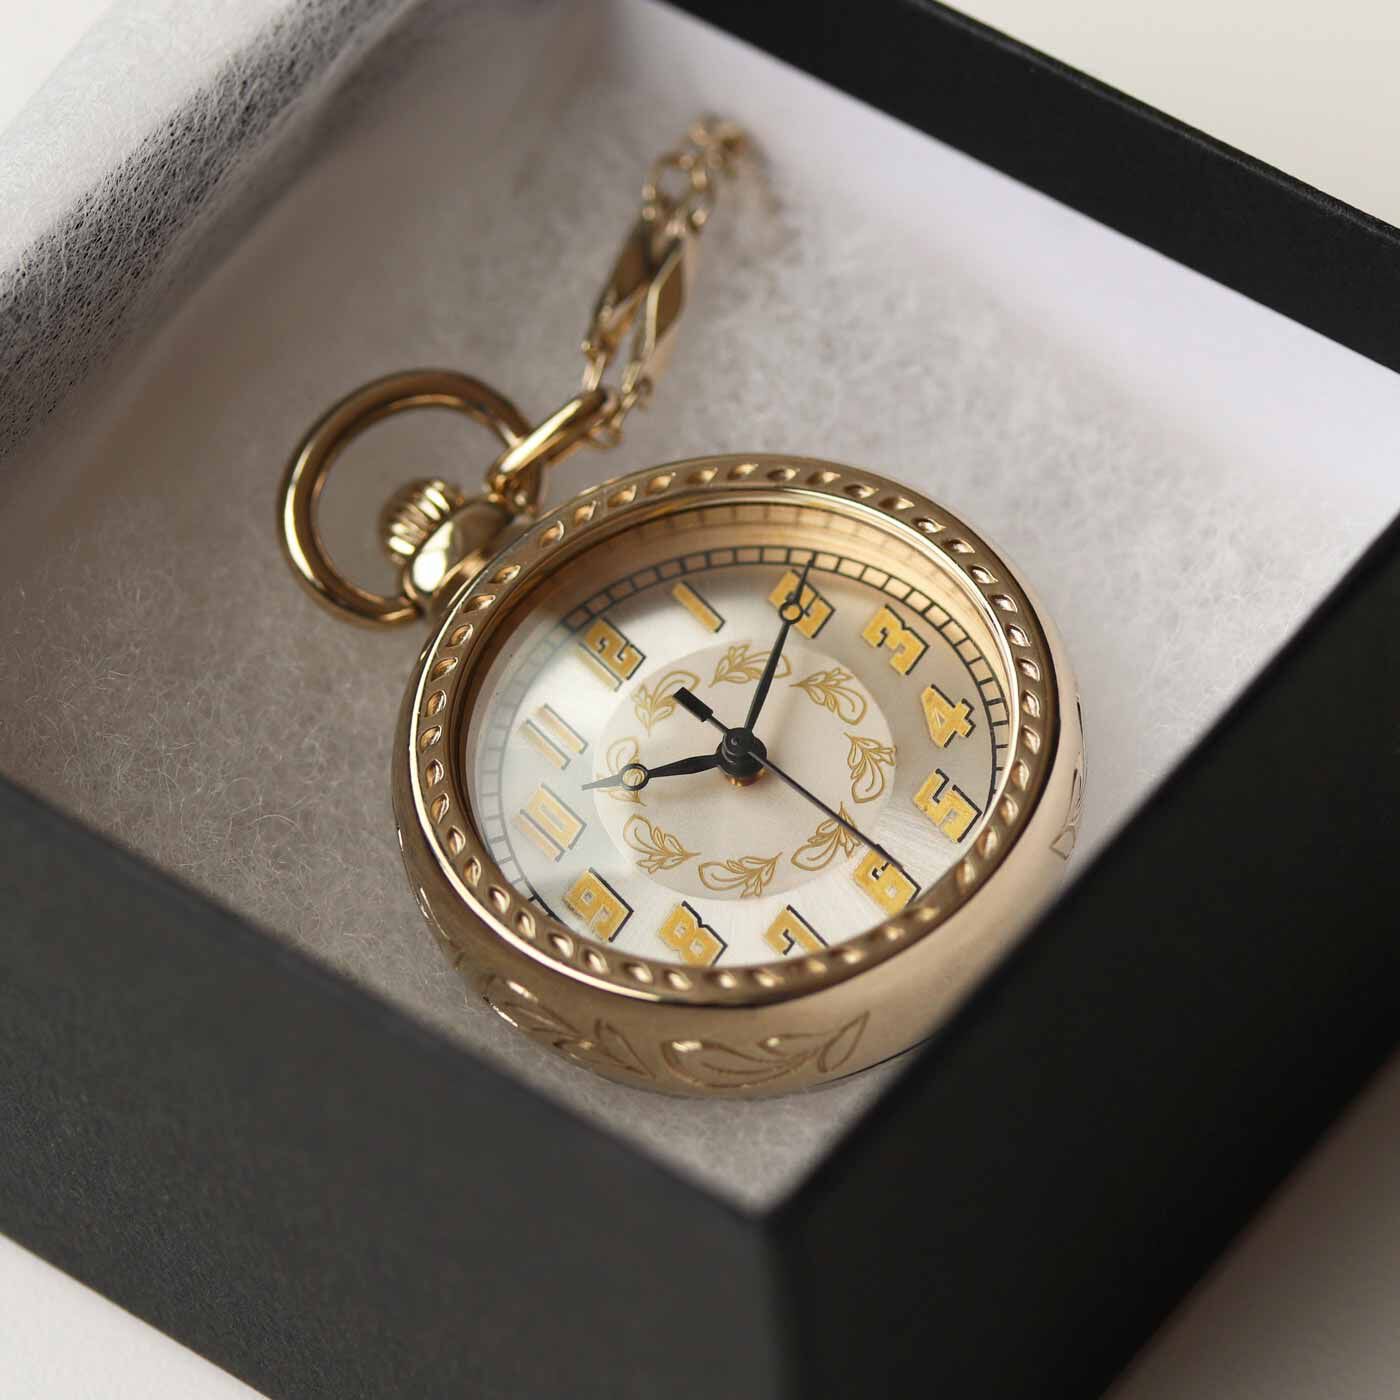 ＆Stories|滋賀の時計工房と作った アールデコ調の懐中時計〈シャンパンゴールド〉|箱入りなのでギフトにも。